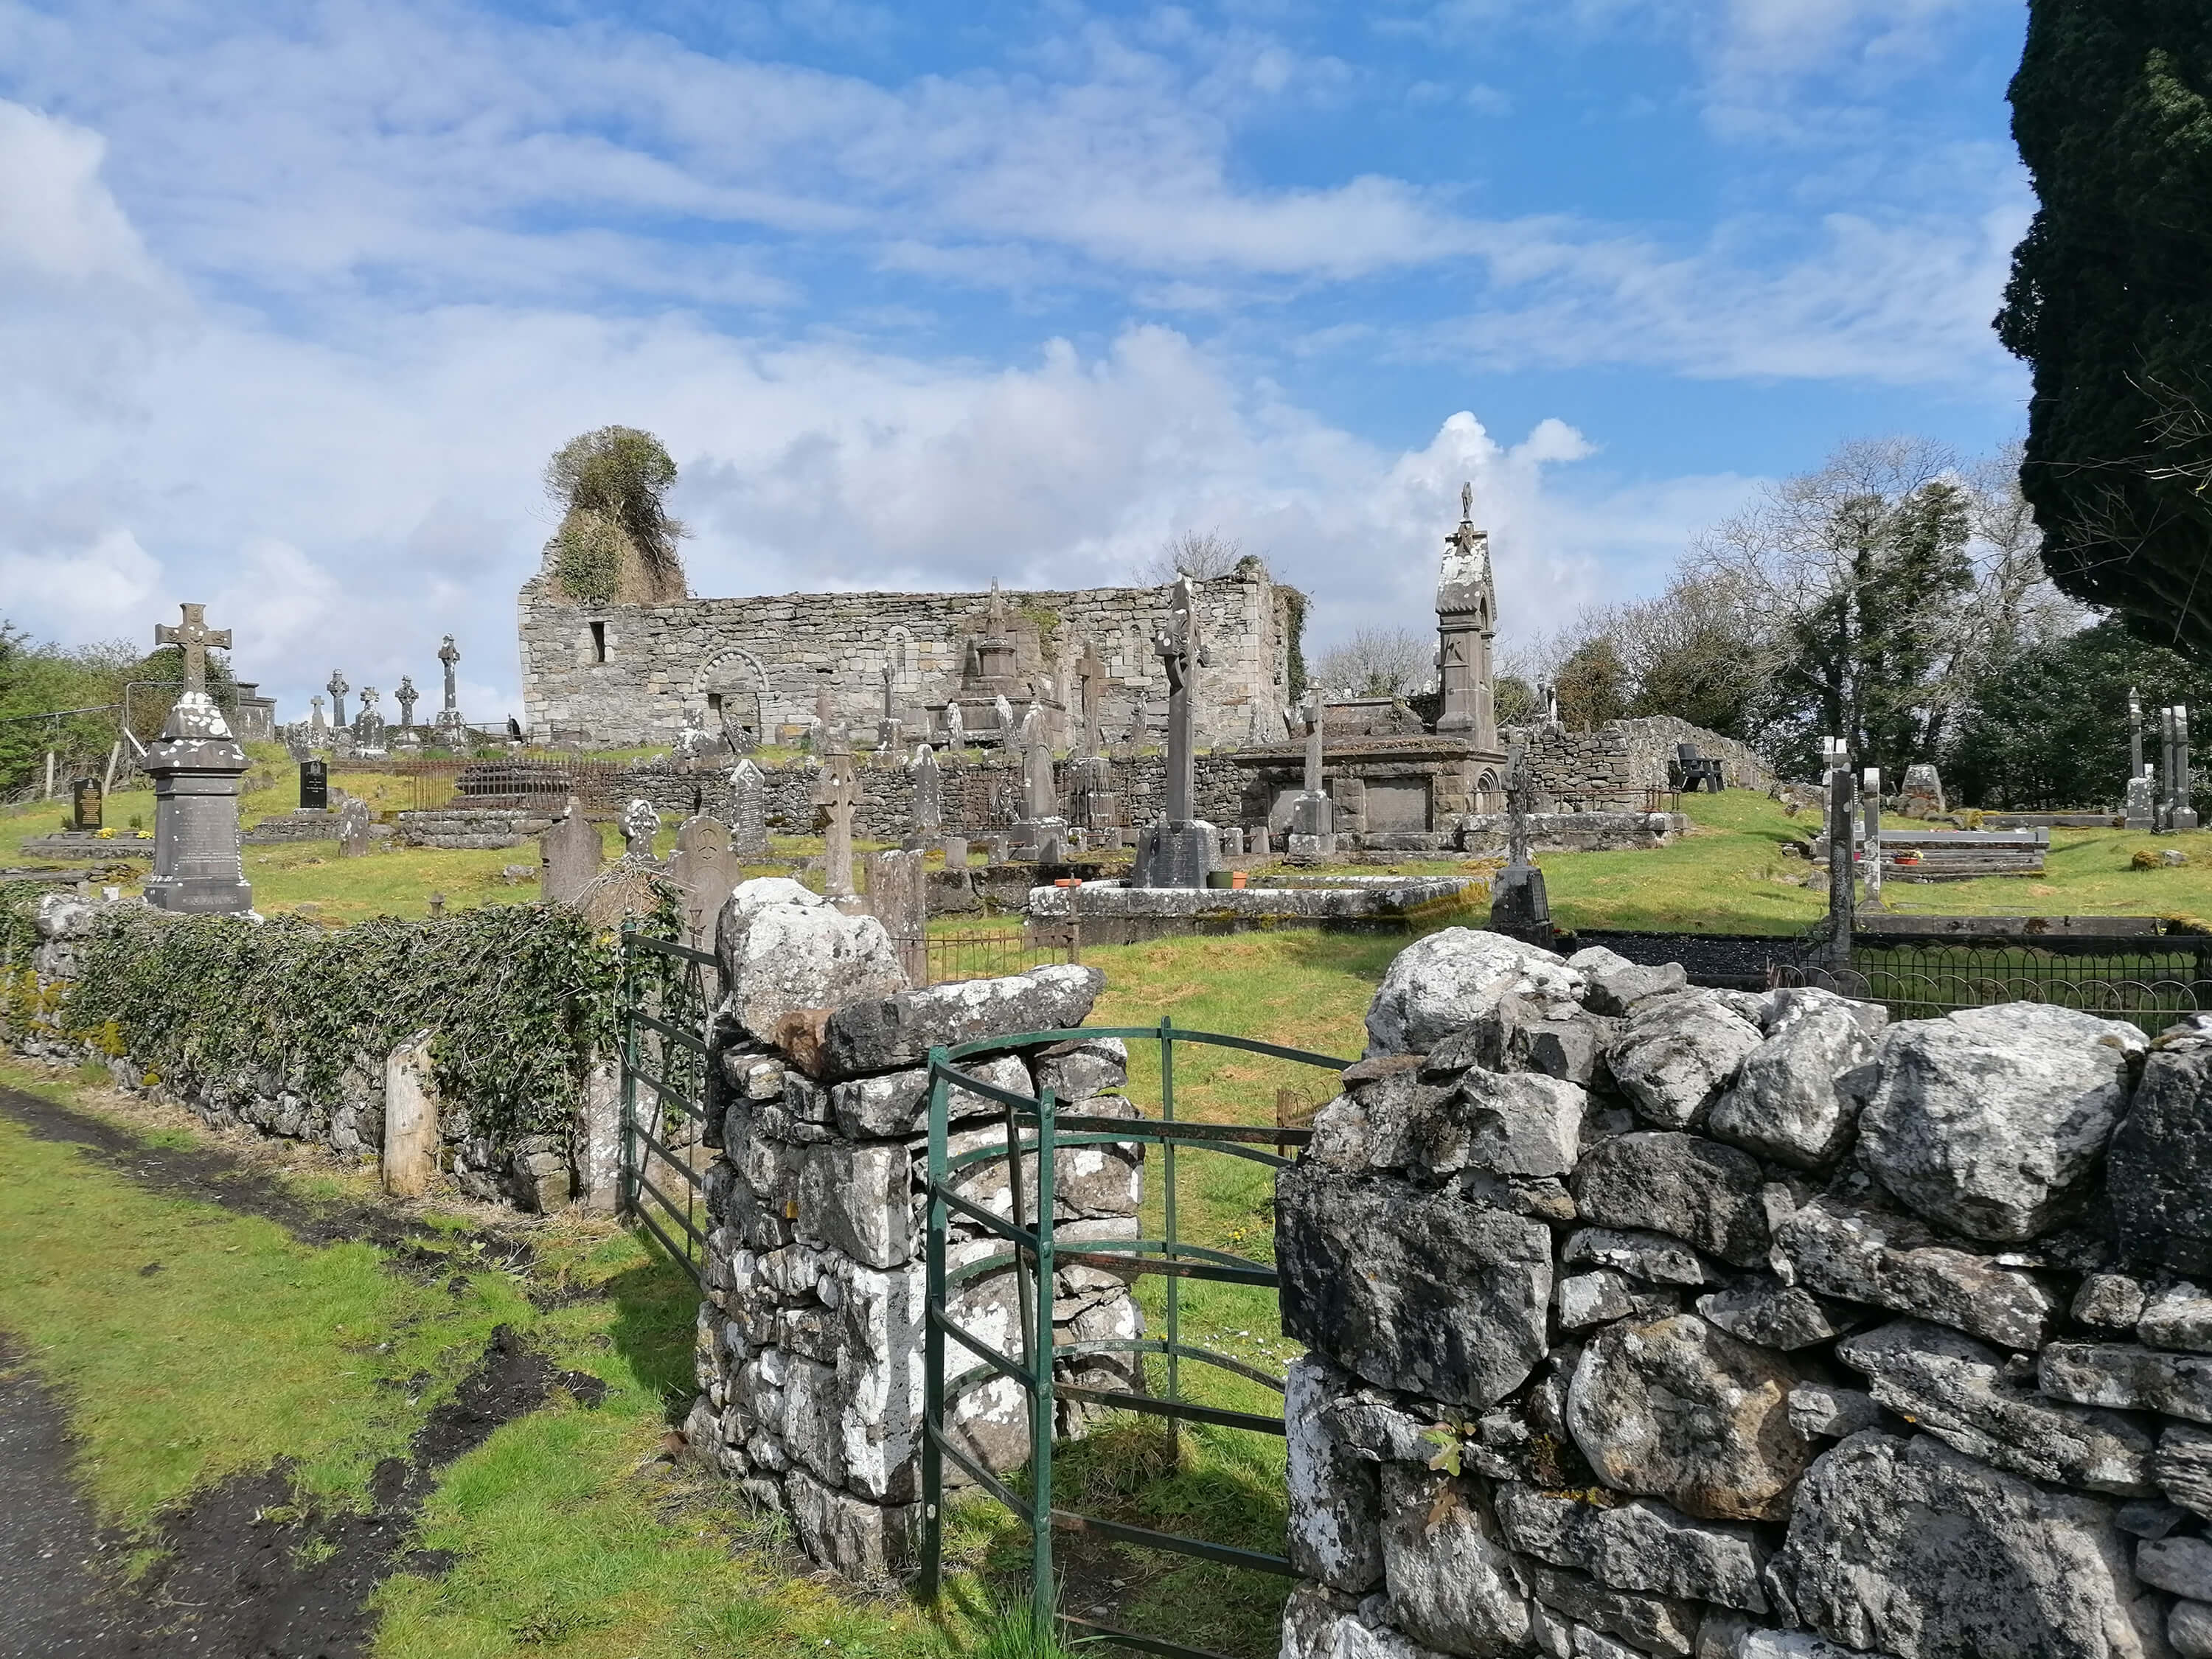 Funding awarded for Sligo projects under Community Monuments Fund 2021